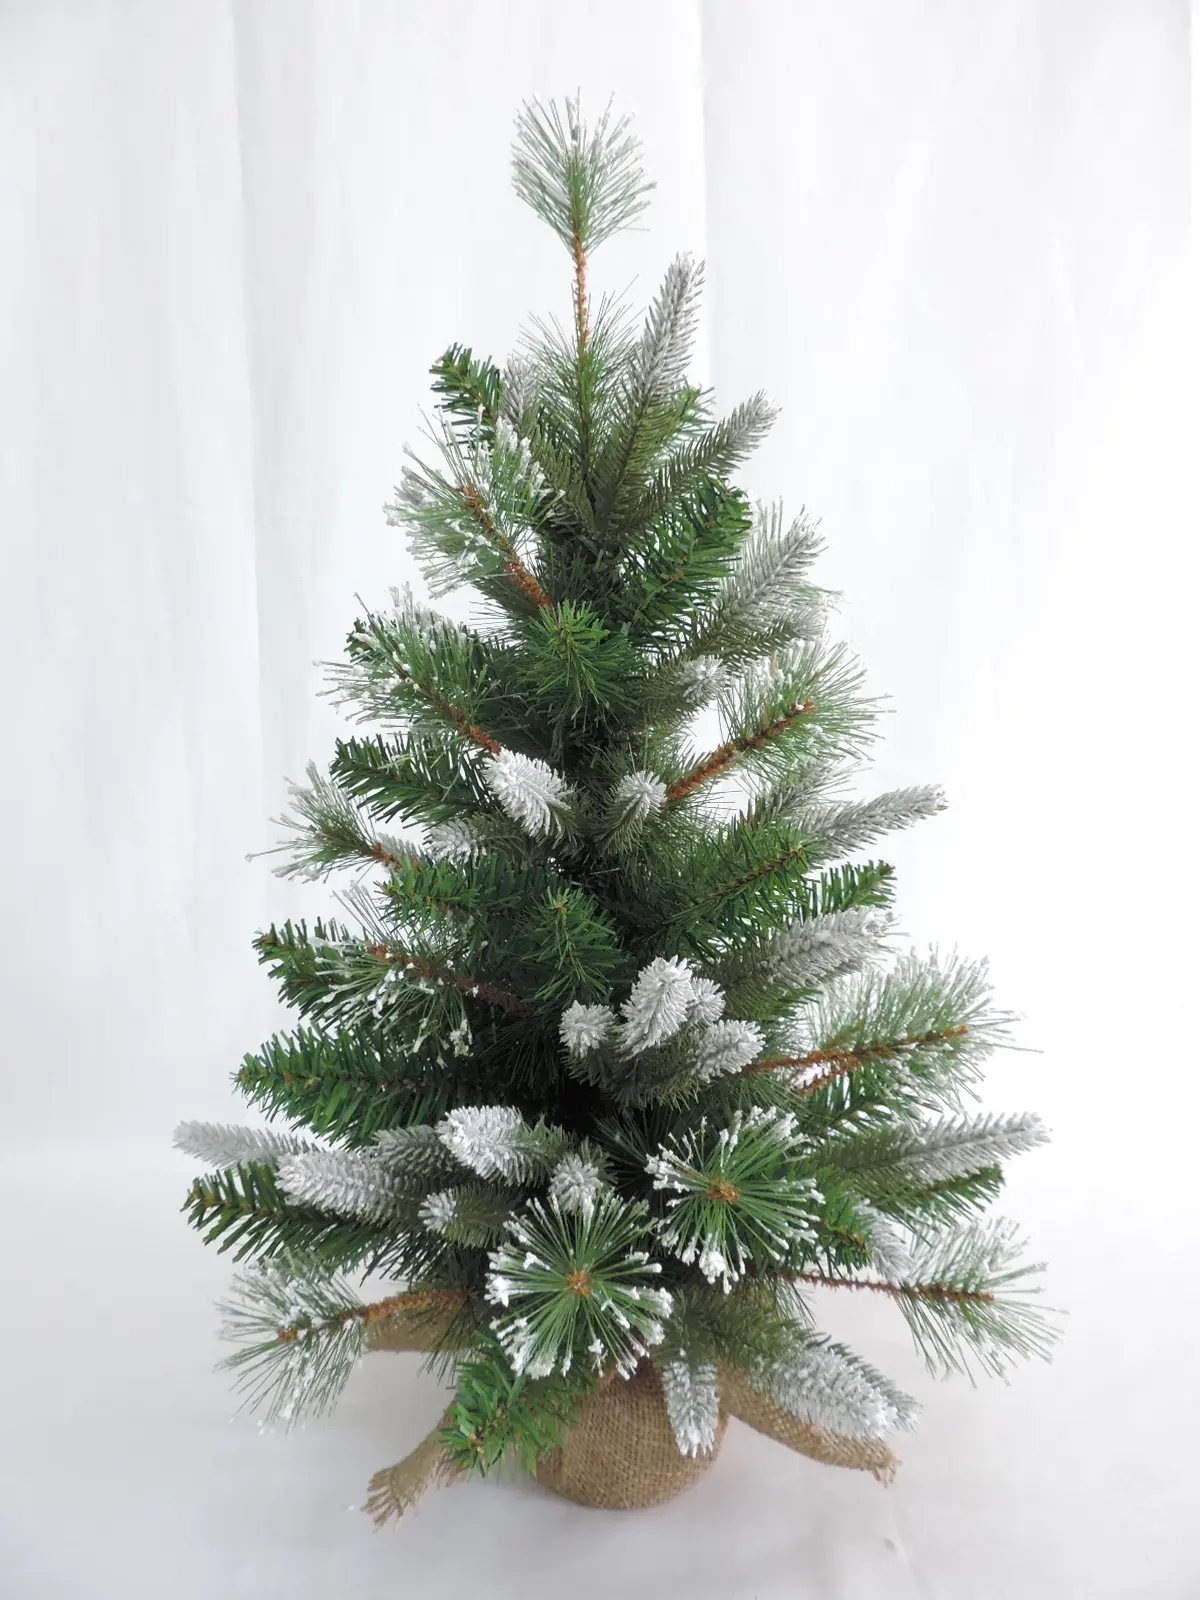 Quel genre d'arbre est un arbre de Noël?Emplacement du sapin de Noël ?